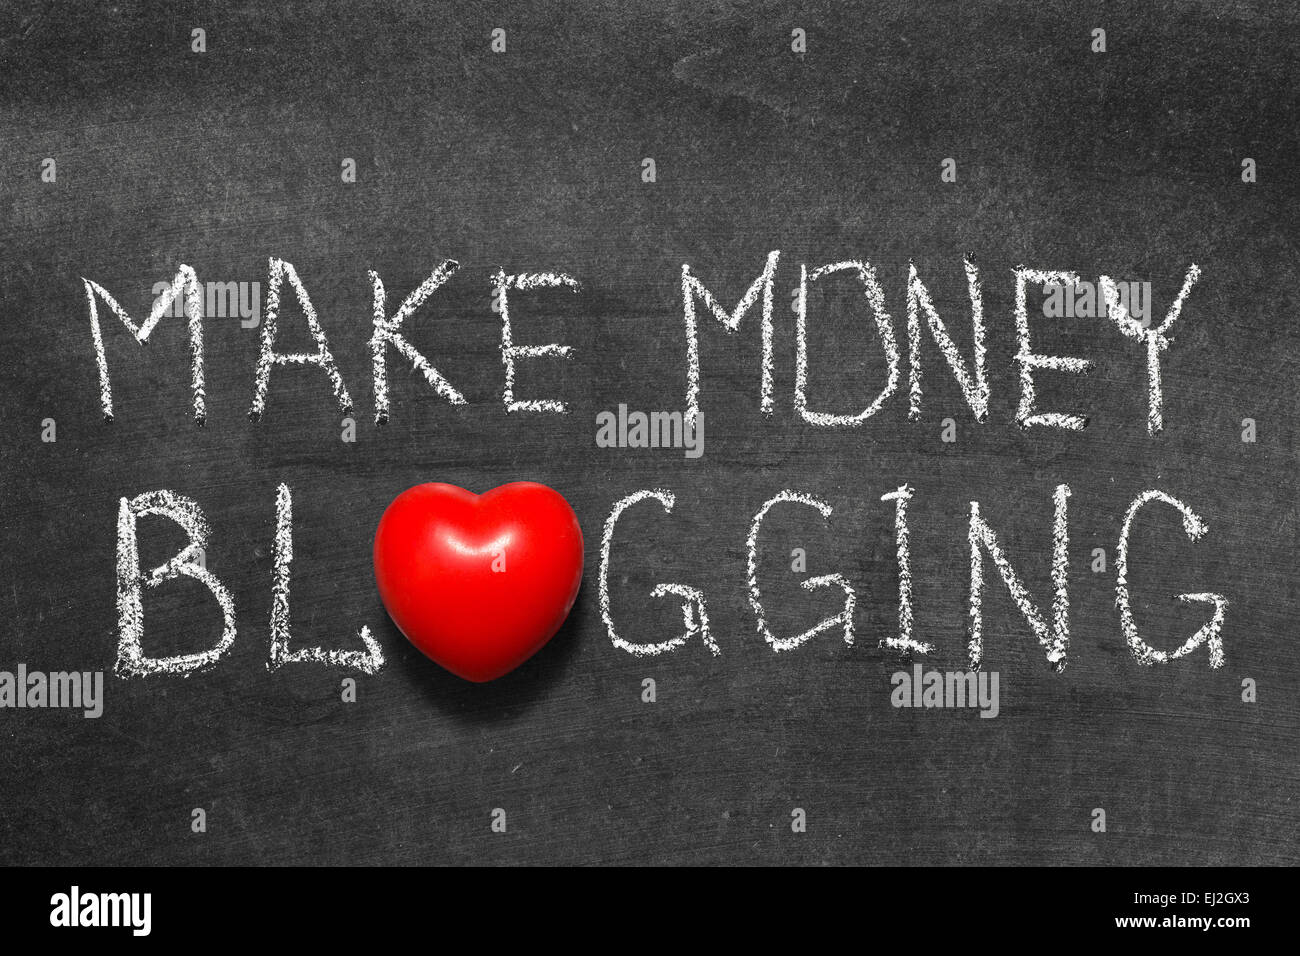 make money blogging phrase handwritten on blackboard with heart symbol instead of O Stock Photo